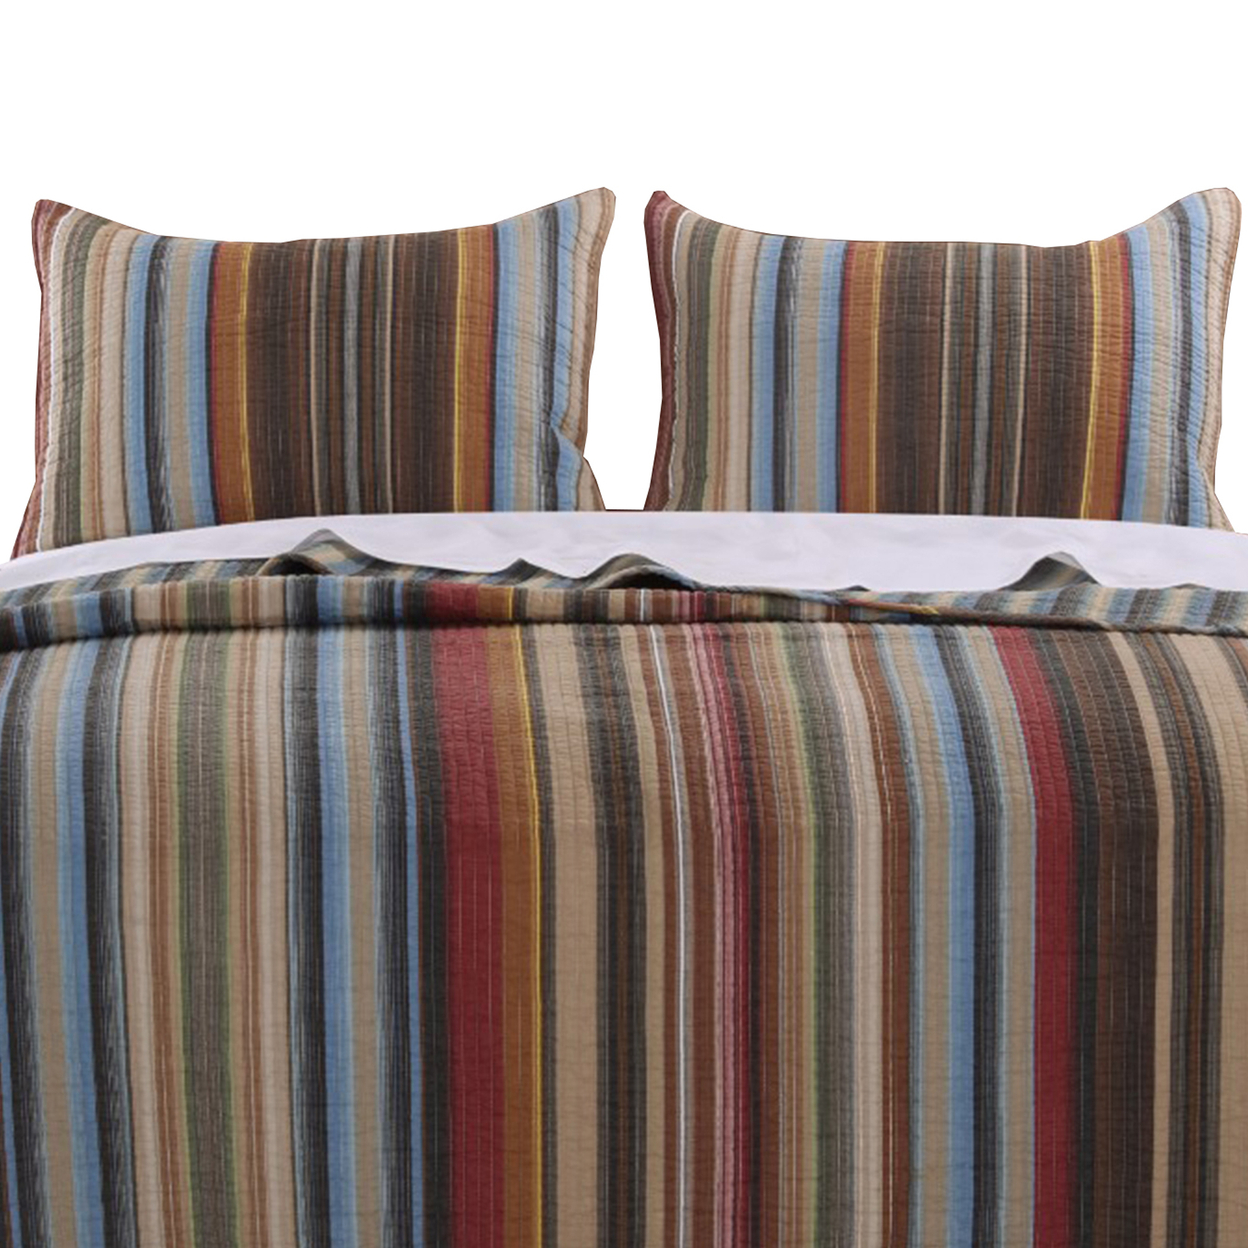 Phoenix Fabric 3 Piece King Size Quilt Set With Striped Prints, Multicolor- Saltoro Sherpi